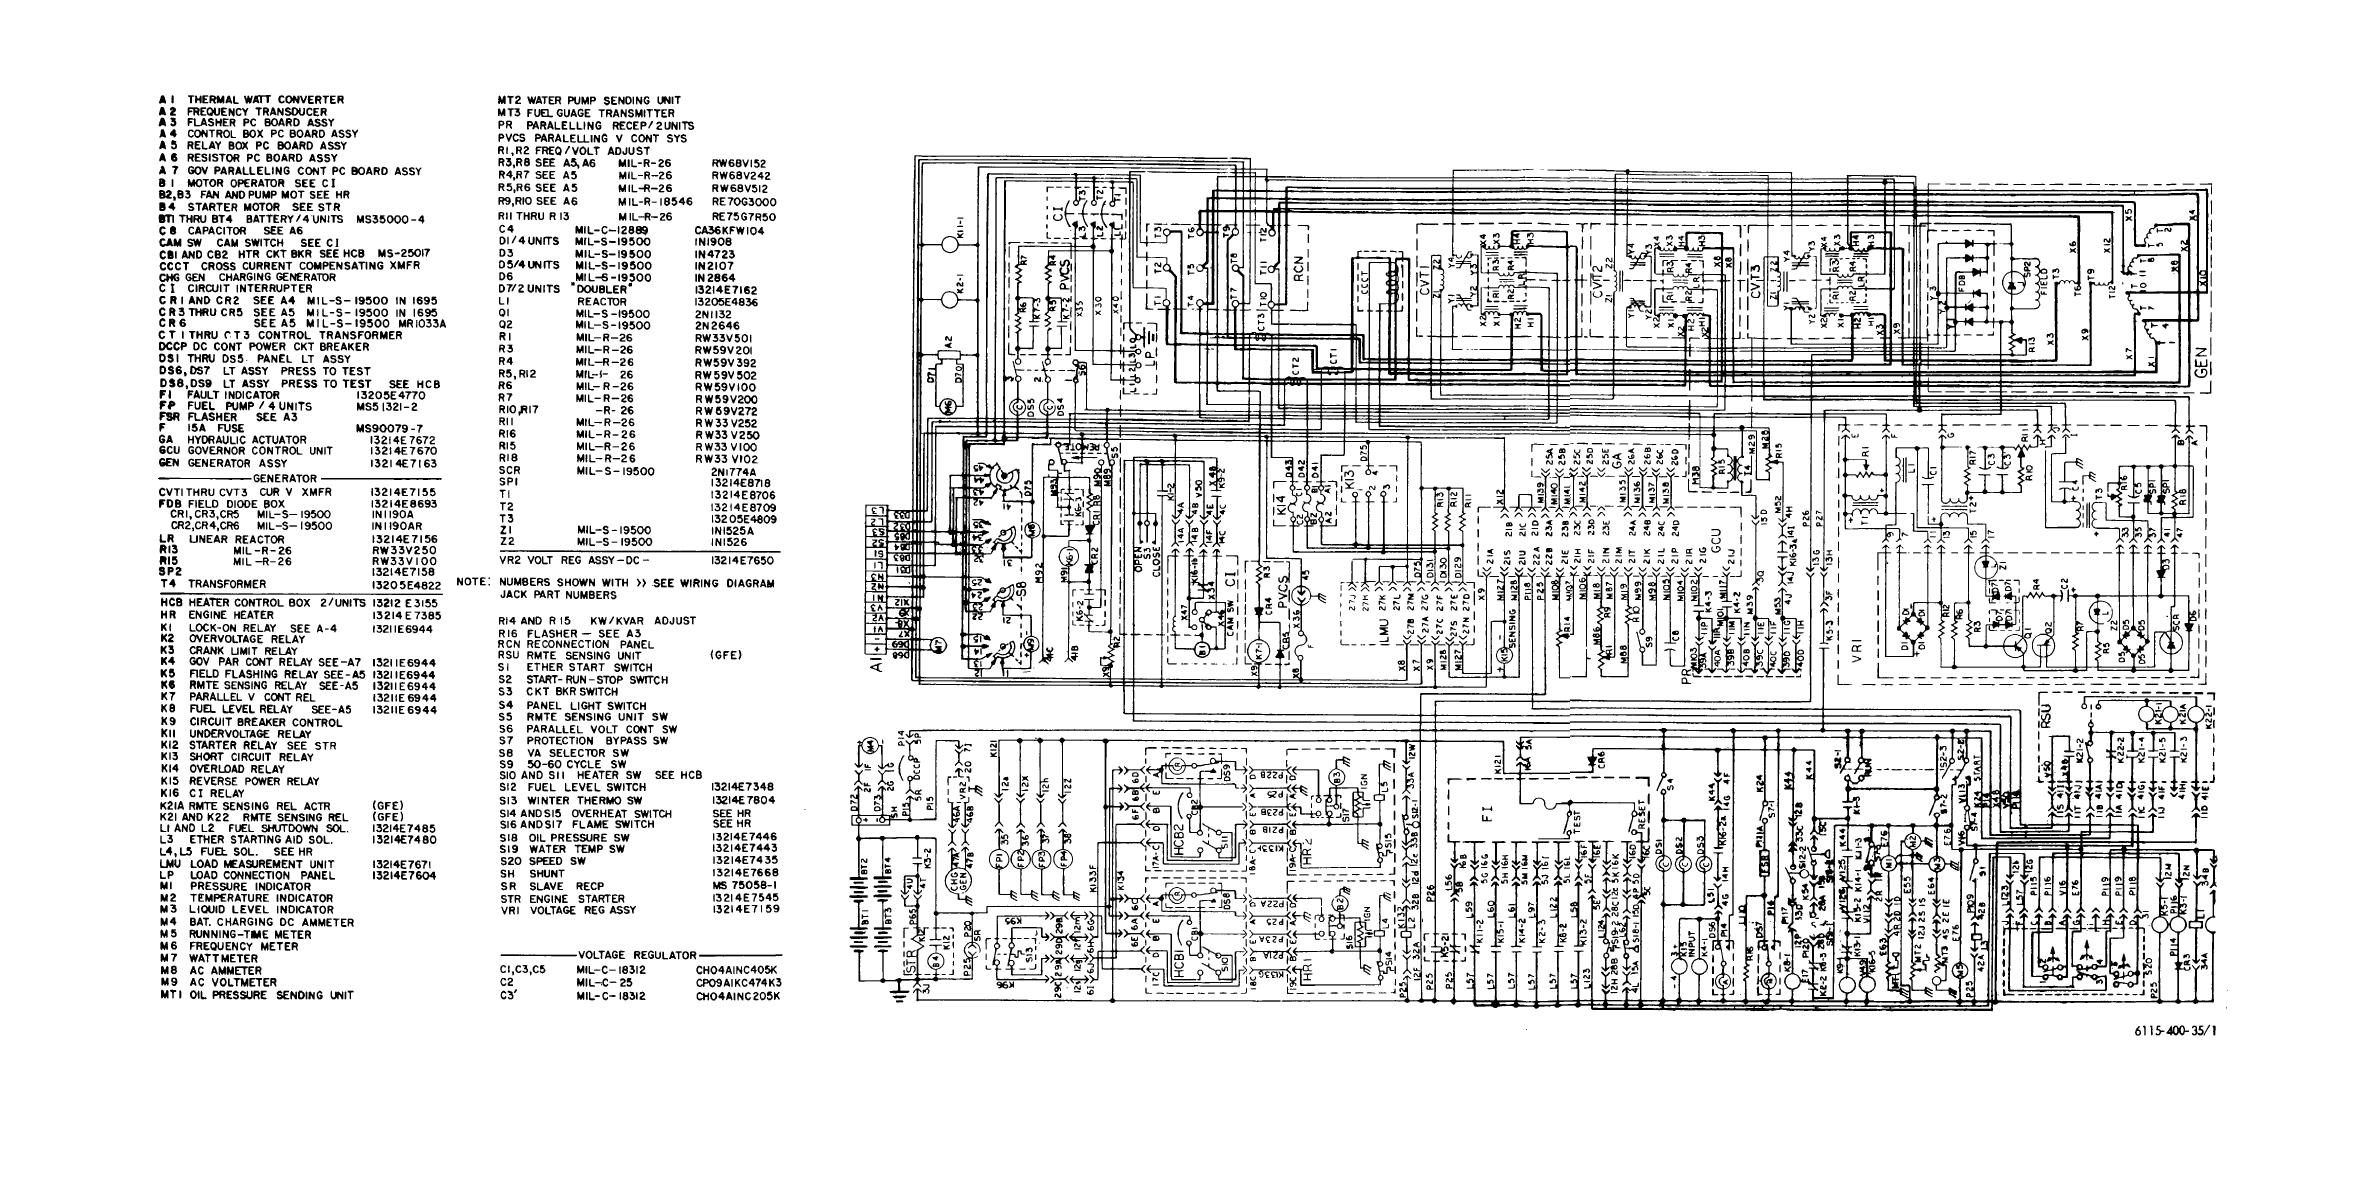 34 Circuit Diagram Legend - Free Wiring Diagram Source